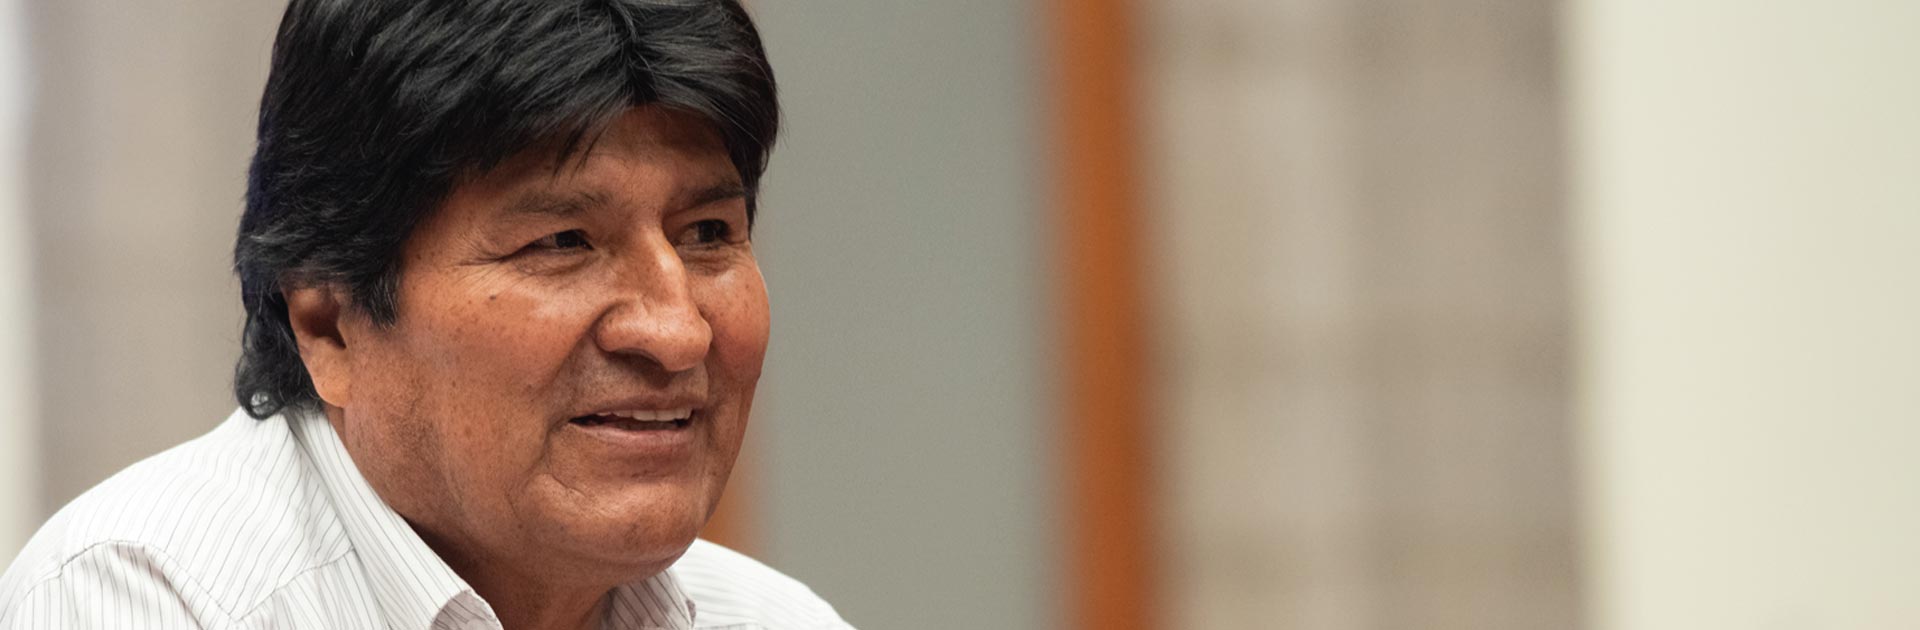 Doctorado Honoris Causa a Evo Morales Ayma